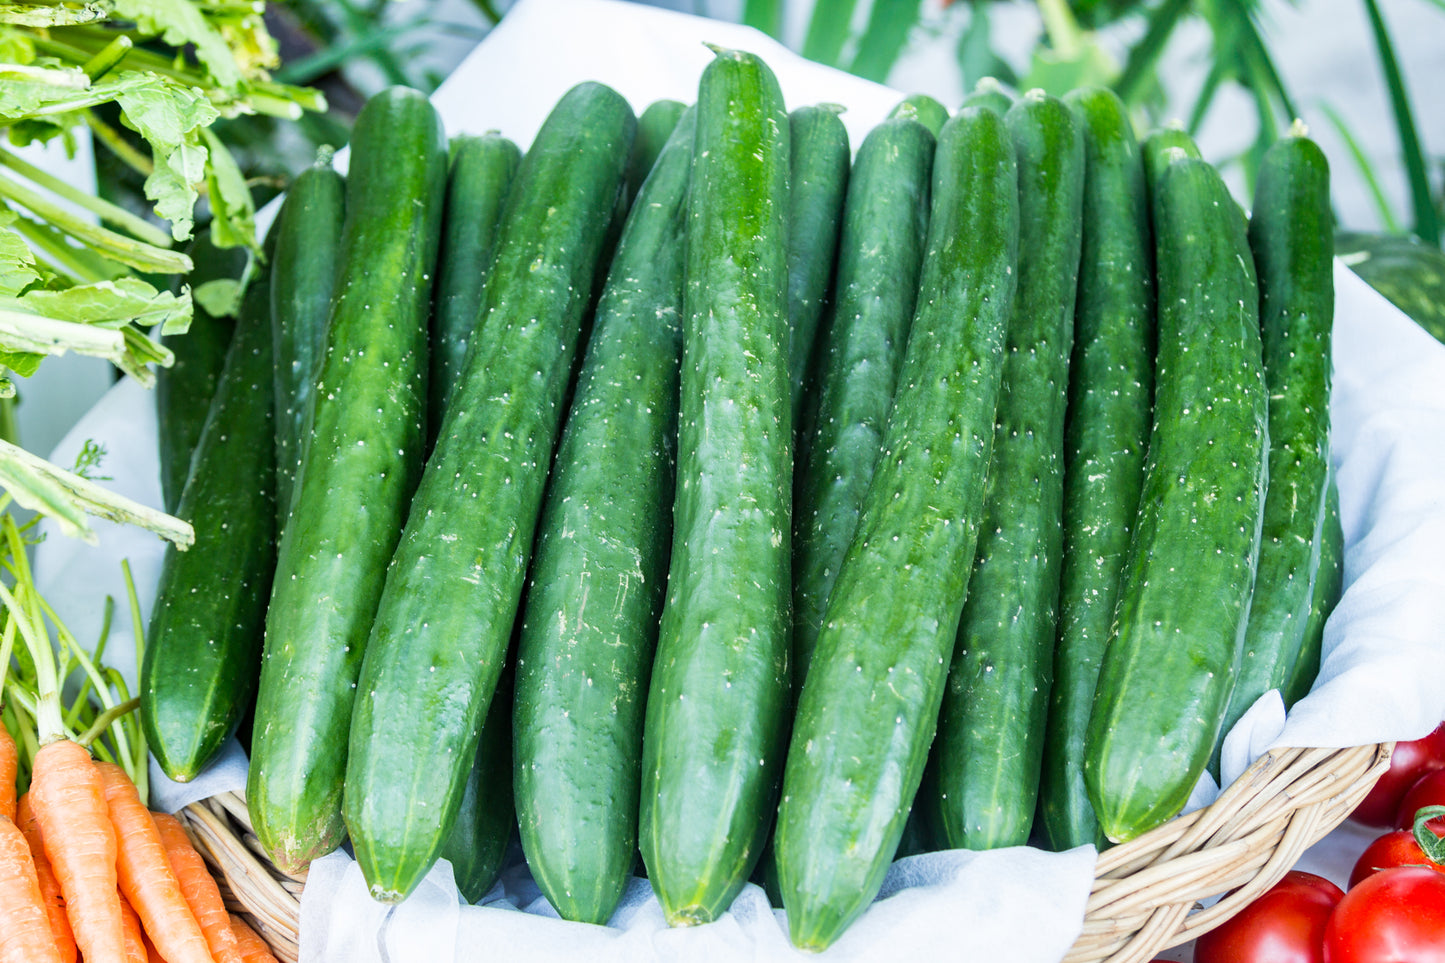 Cucumber Burpless Tasty Green F1 Hybrid Seeds